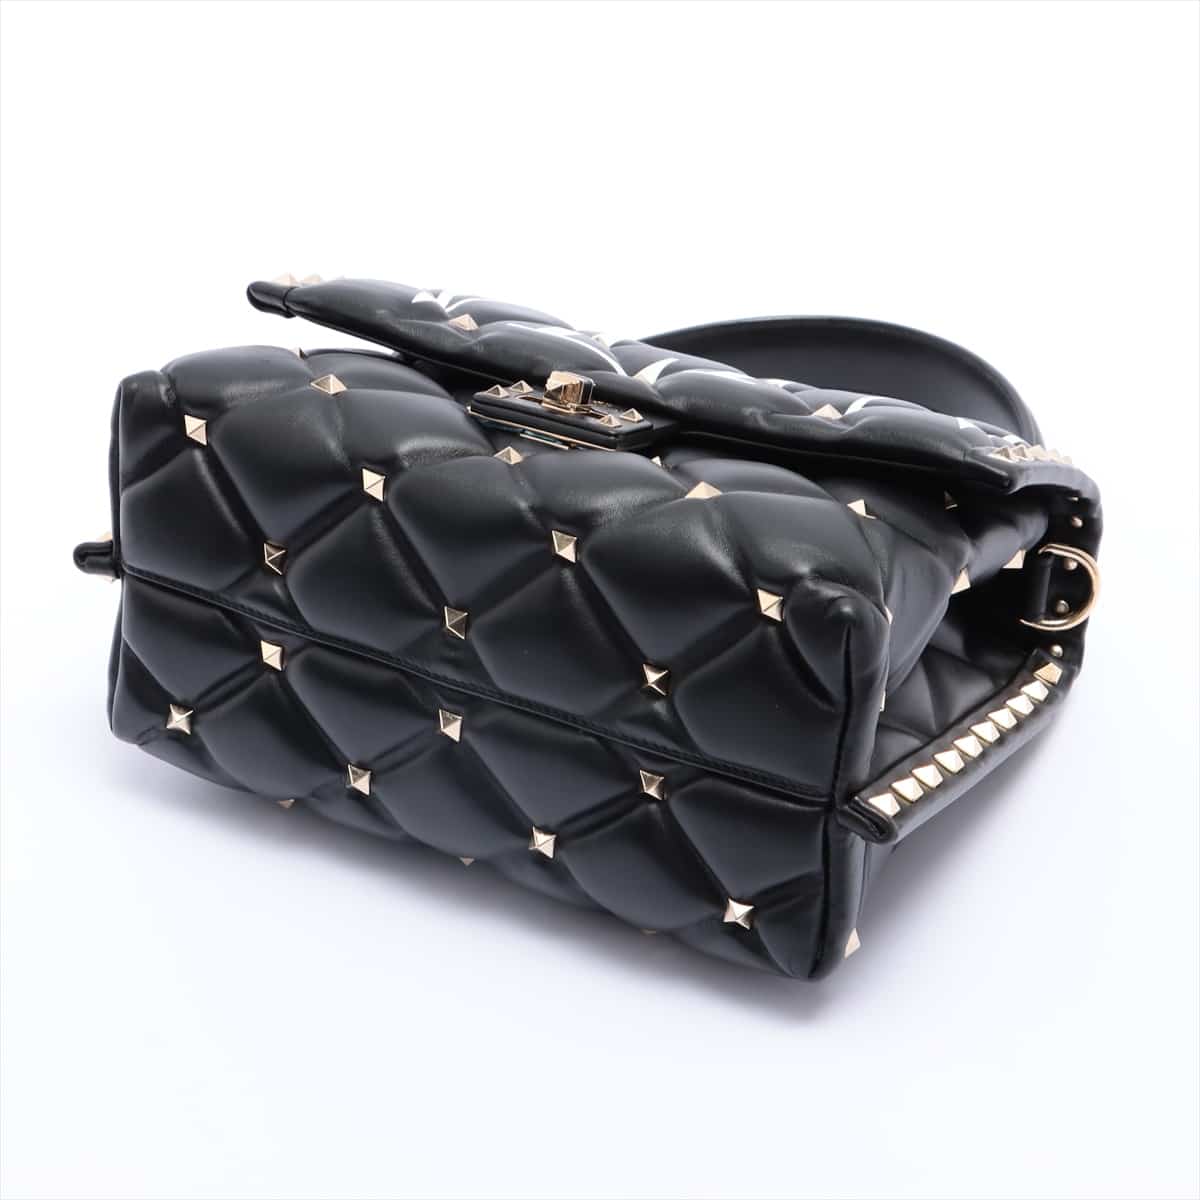 Valentino Garavani VLTN Candy leather x studs 2way handbag Black With replacement studs